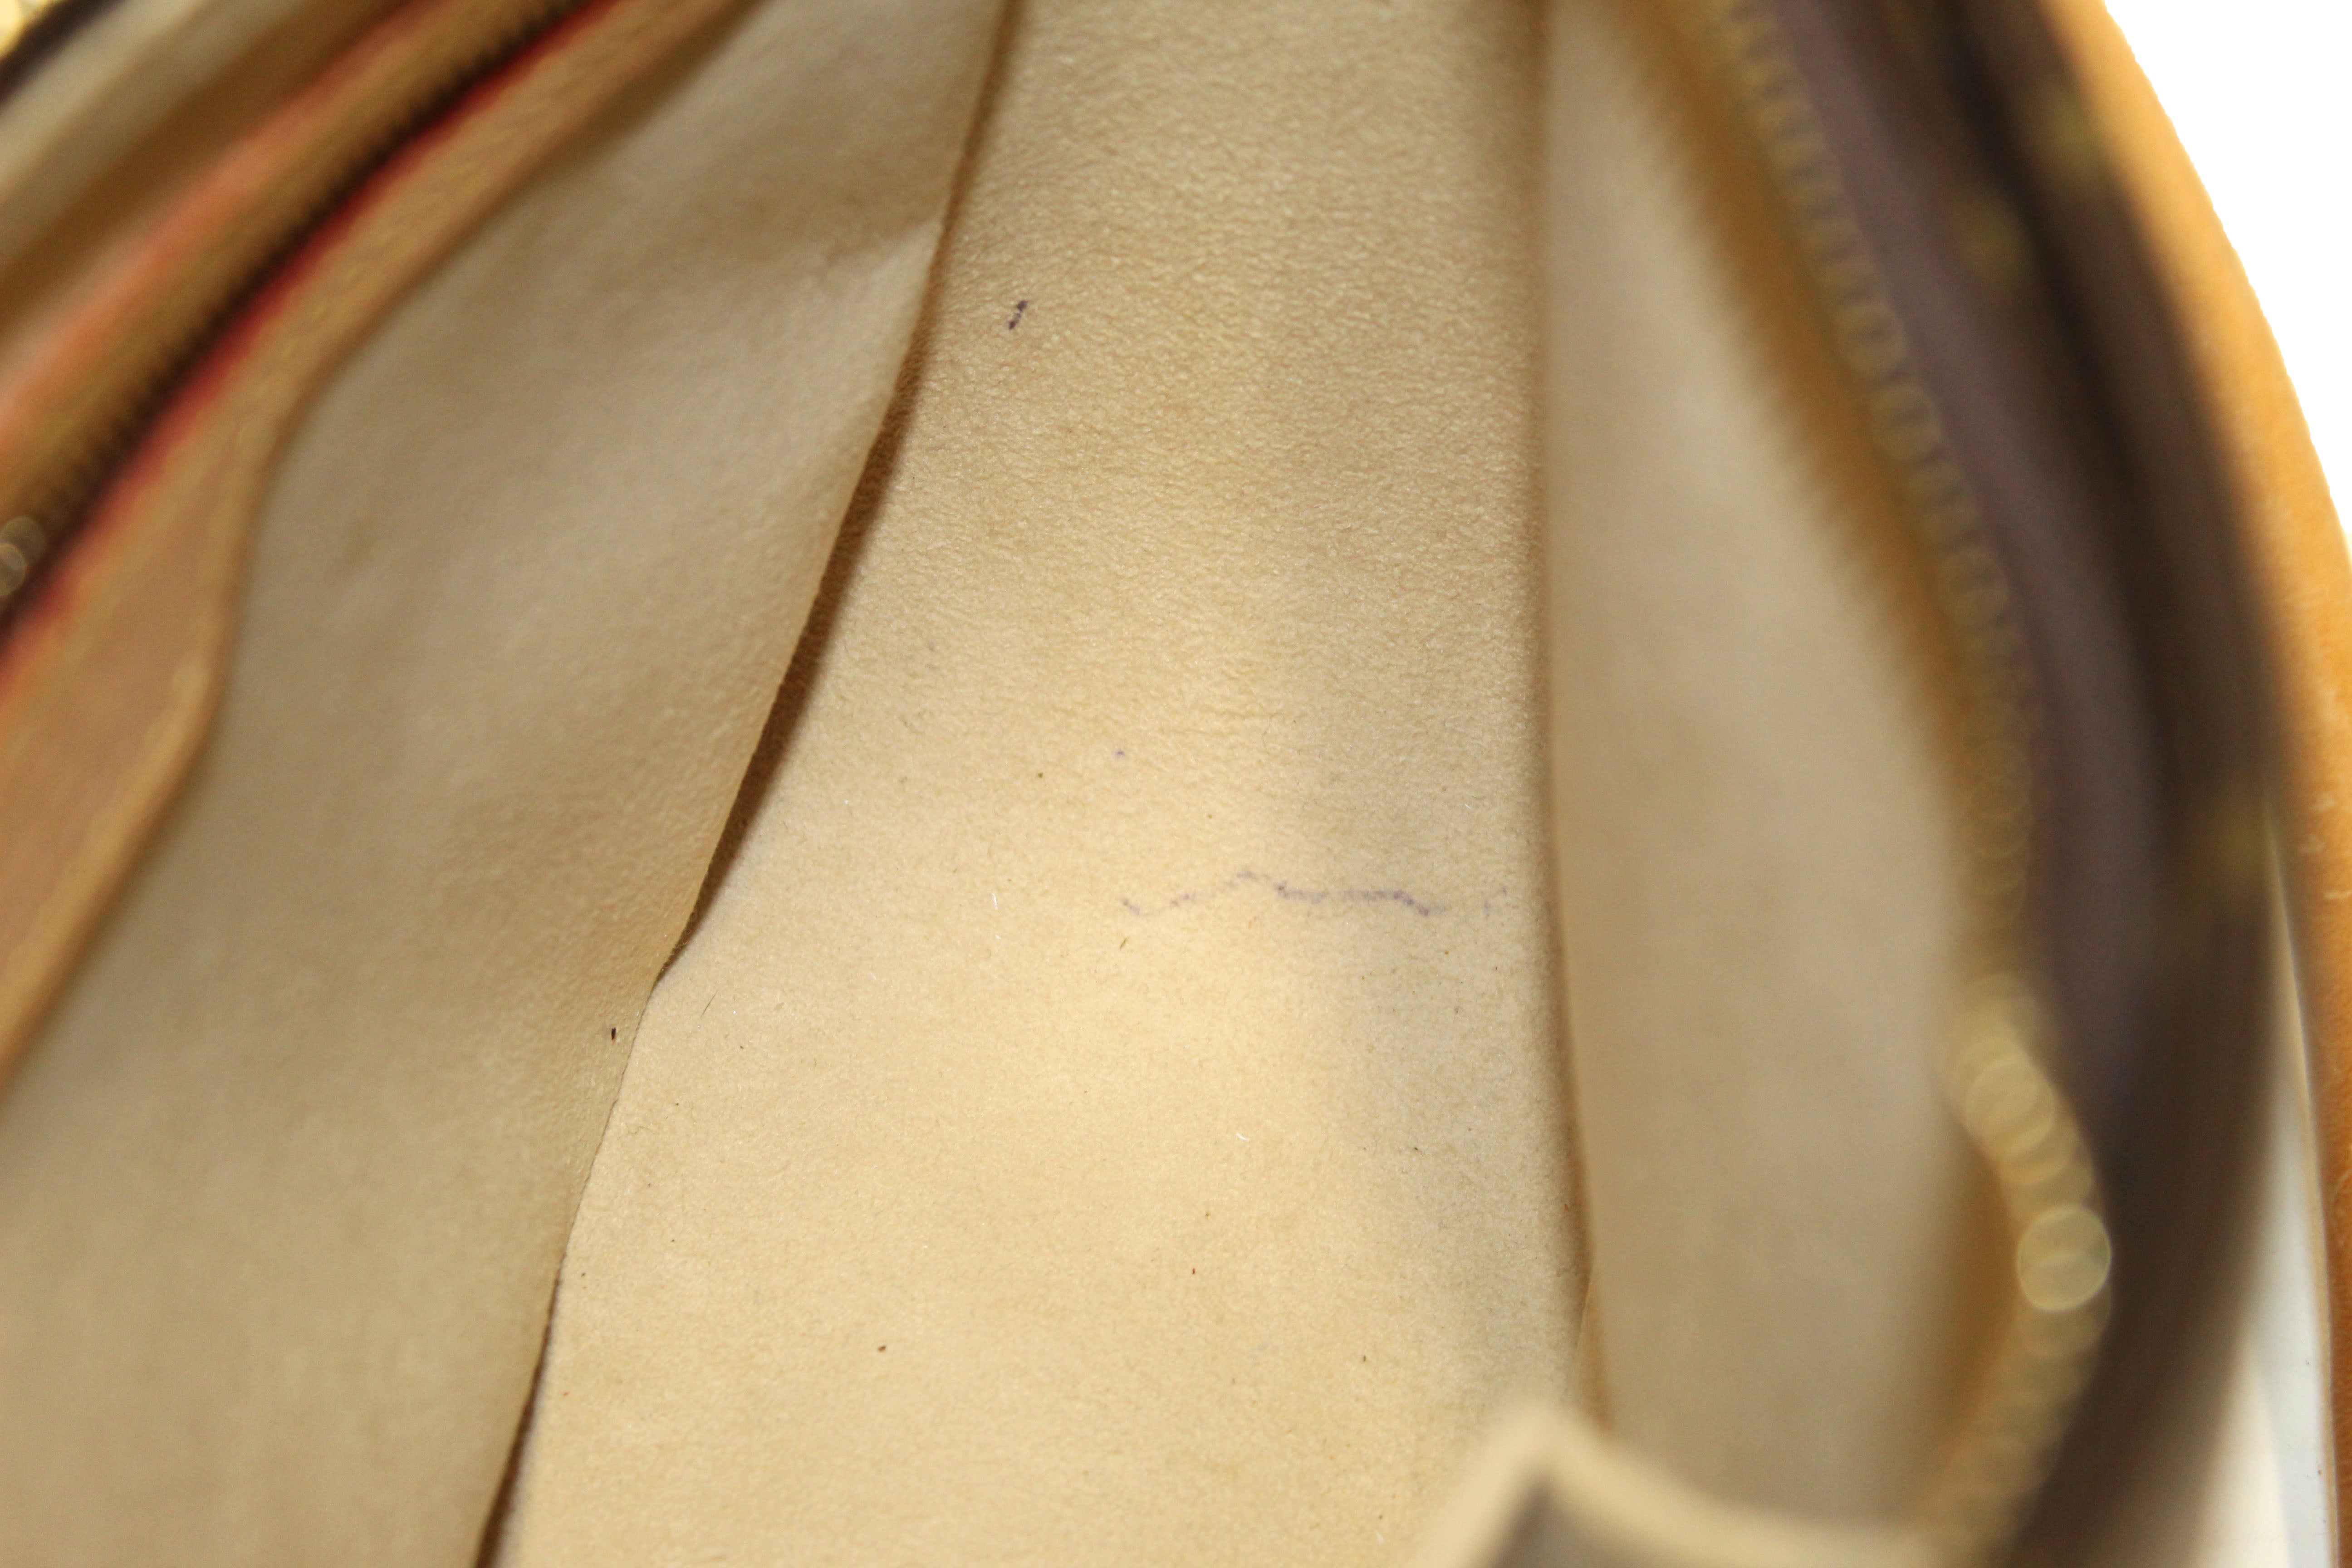 Authentic Louis Vuitton Classic Monogram Canvas Looping MM Shoulder Bag